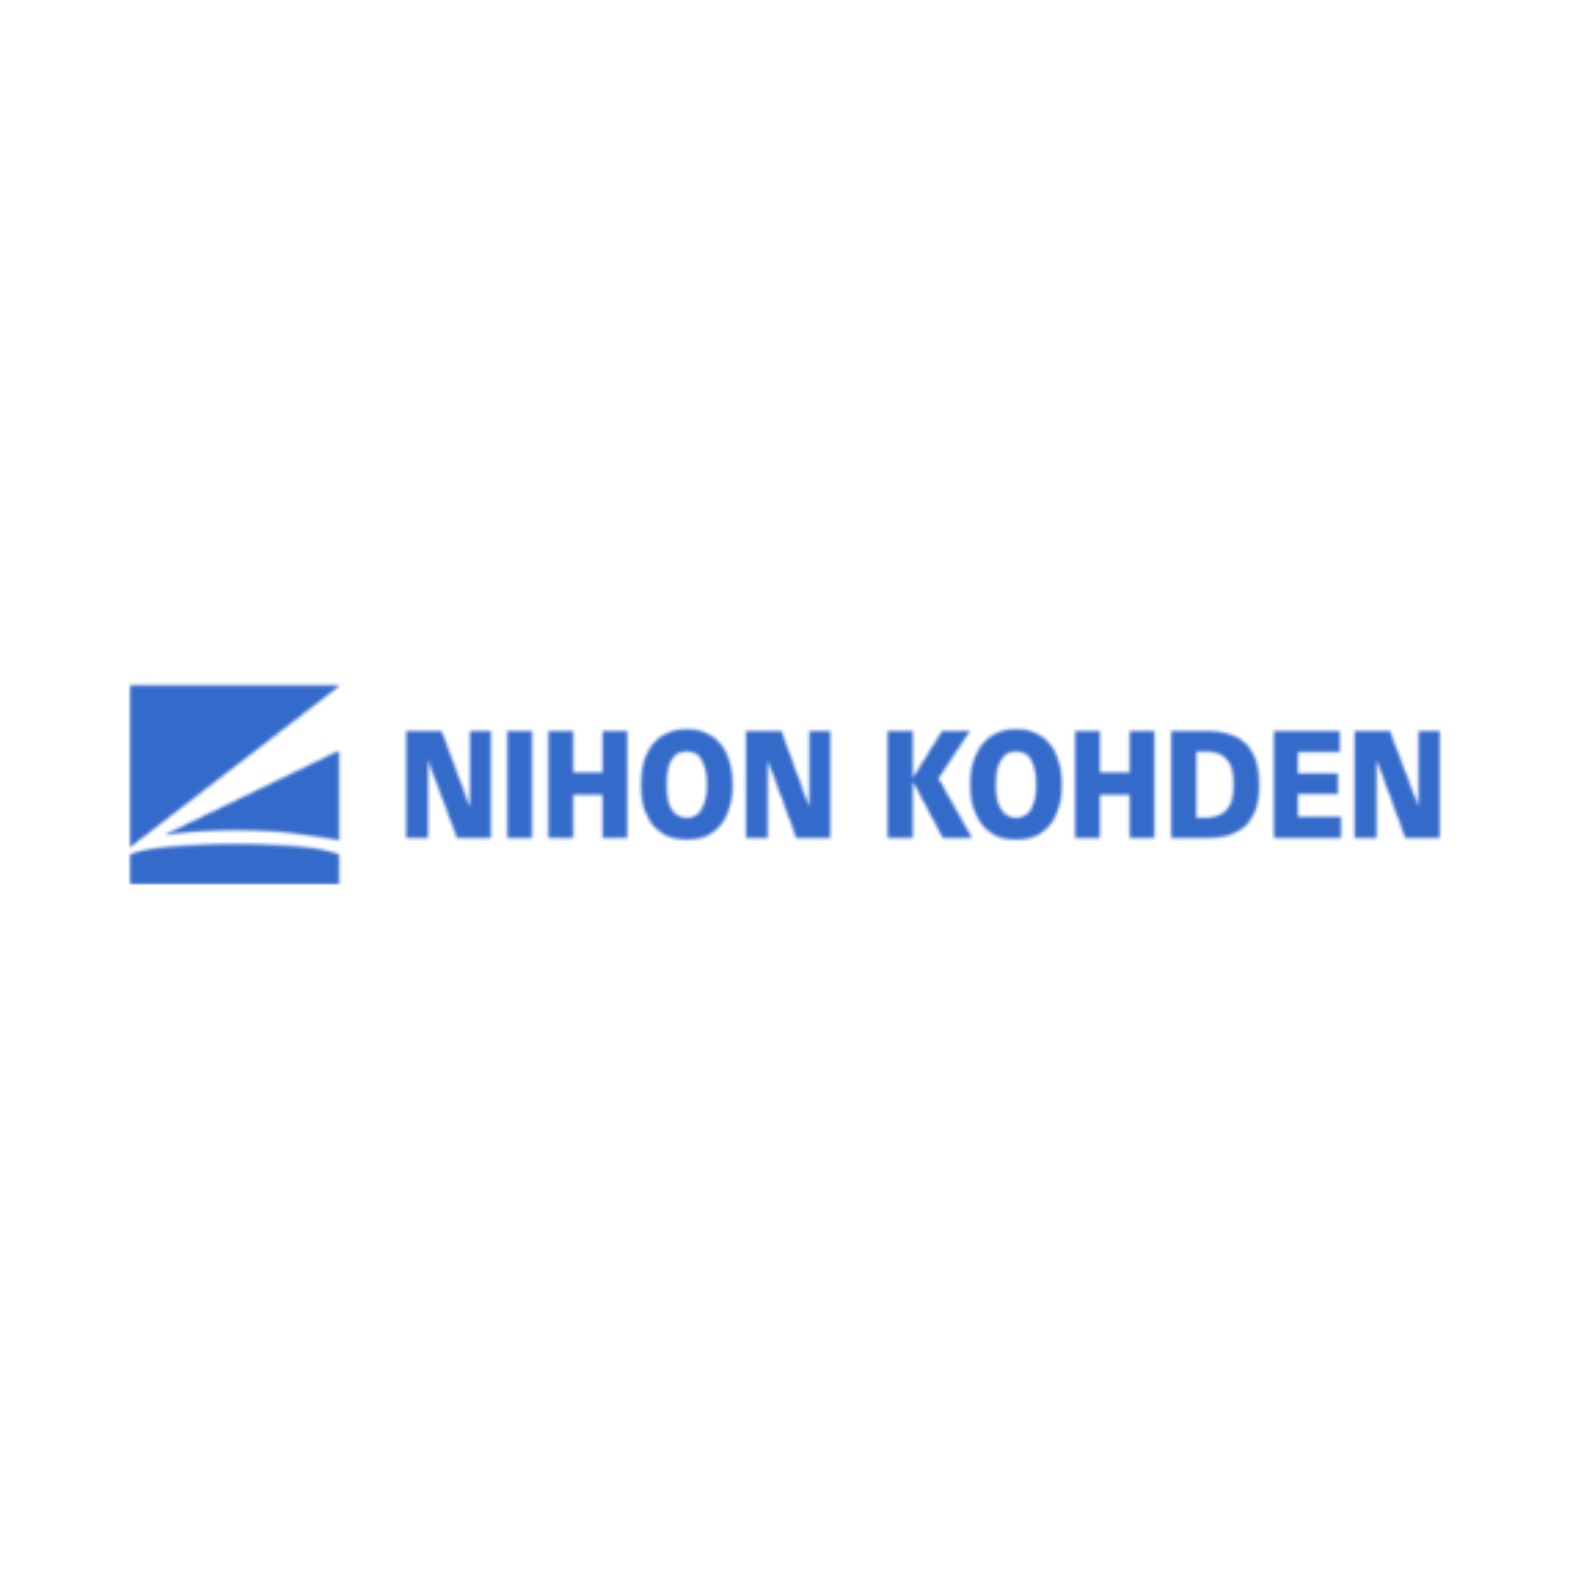 images/AFMS/Partners/Nihon%20Kohden.jpg#joomlaImage://local-images/AFMS/Partners/Nihon Kohden.jpg?width=1570&height=1570